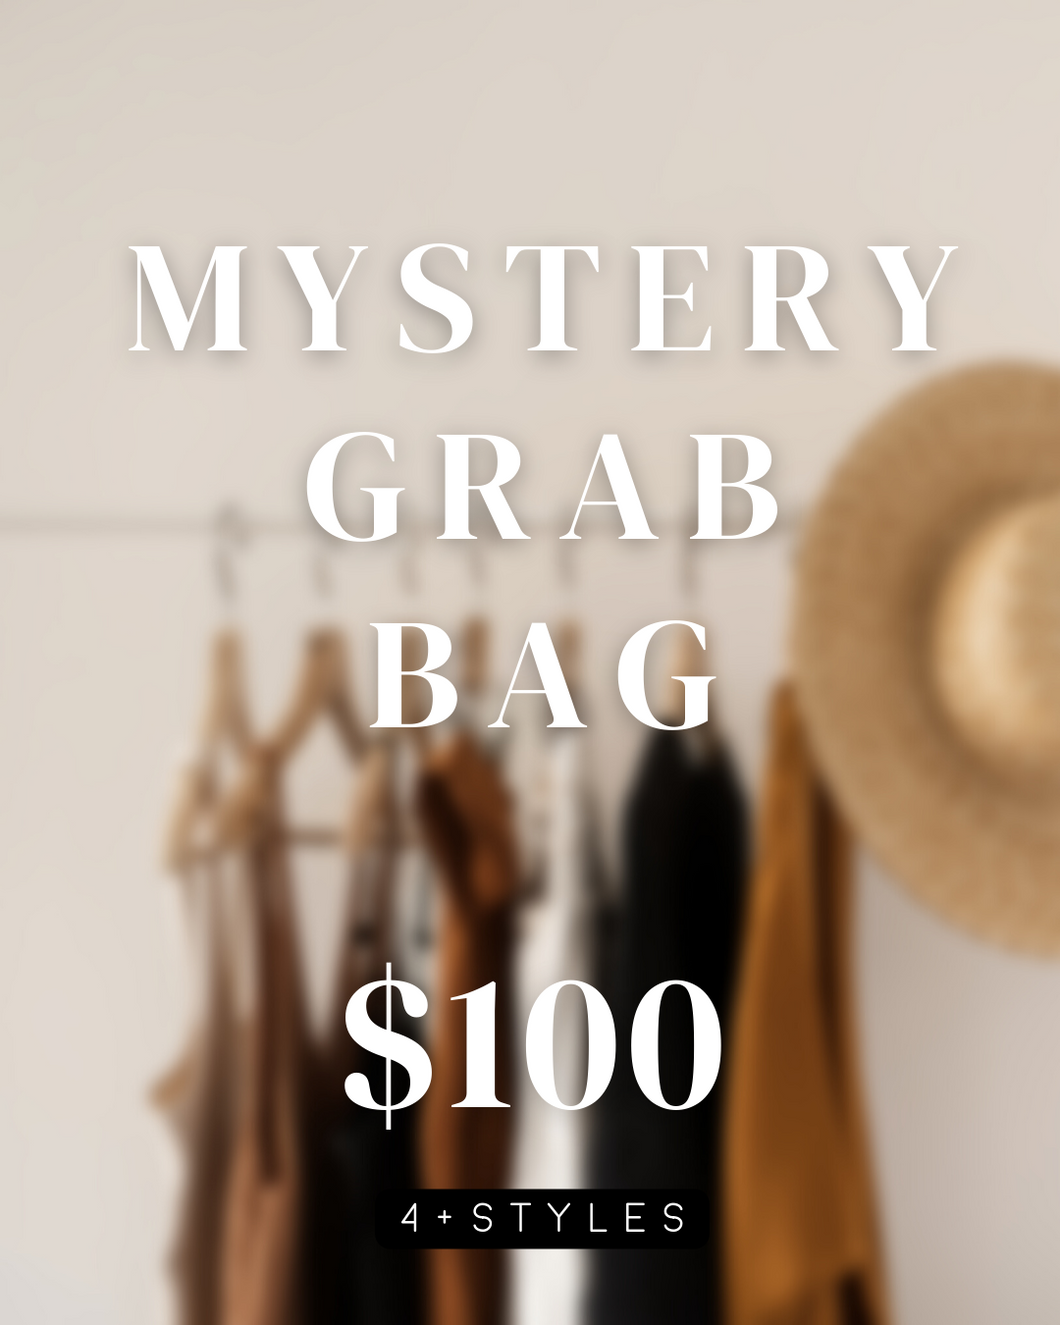 $100 Mystery Grab Bag!